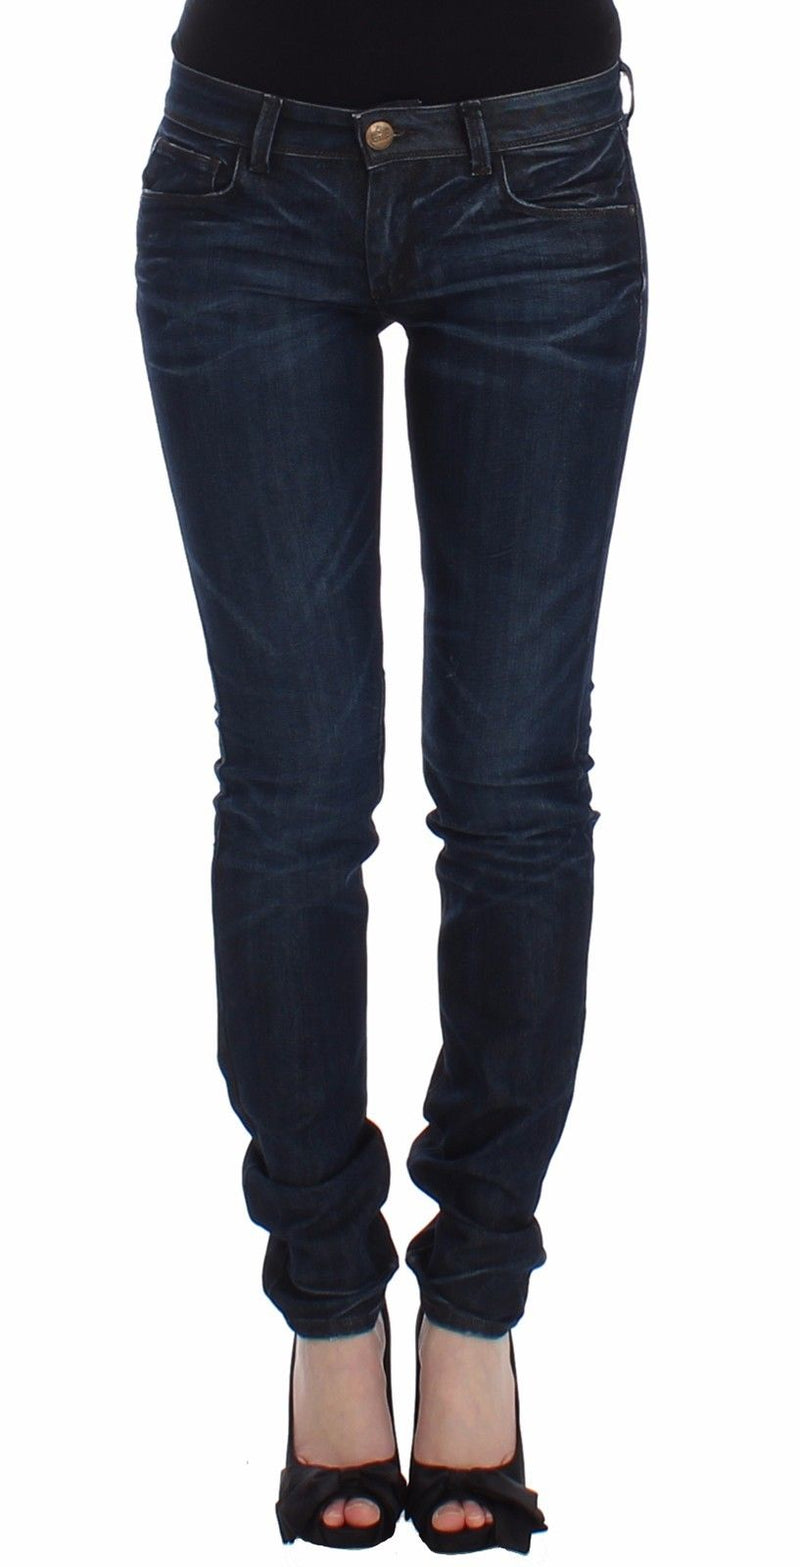 Blue Slim Jeans Denim Pants Skinny Leg Stretch - Avaz Shop